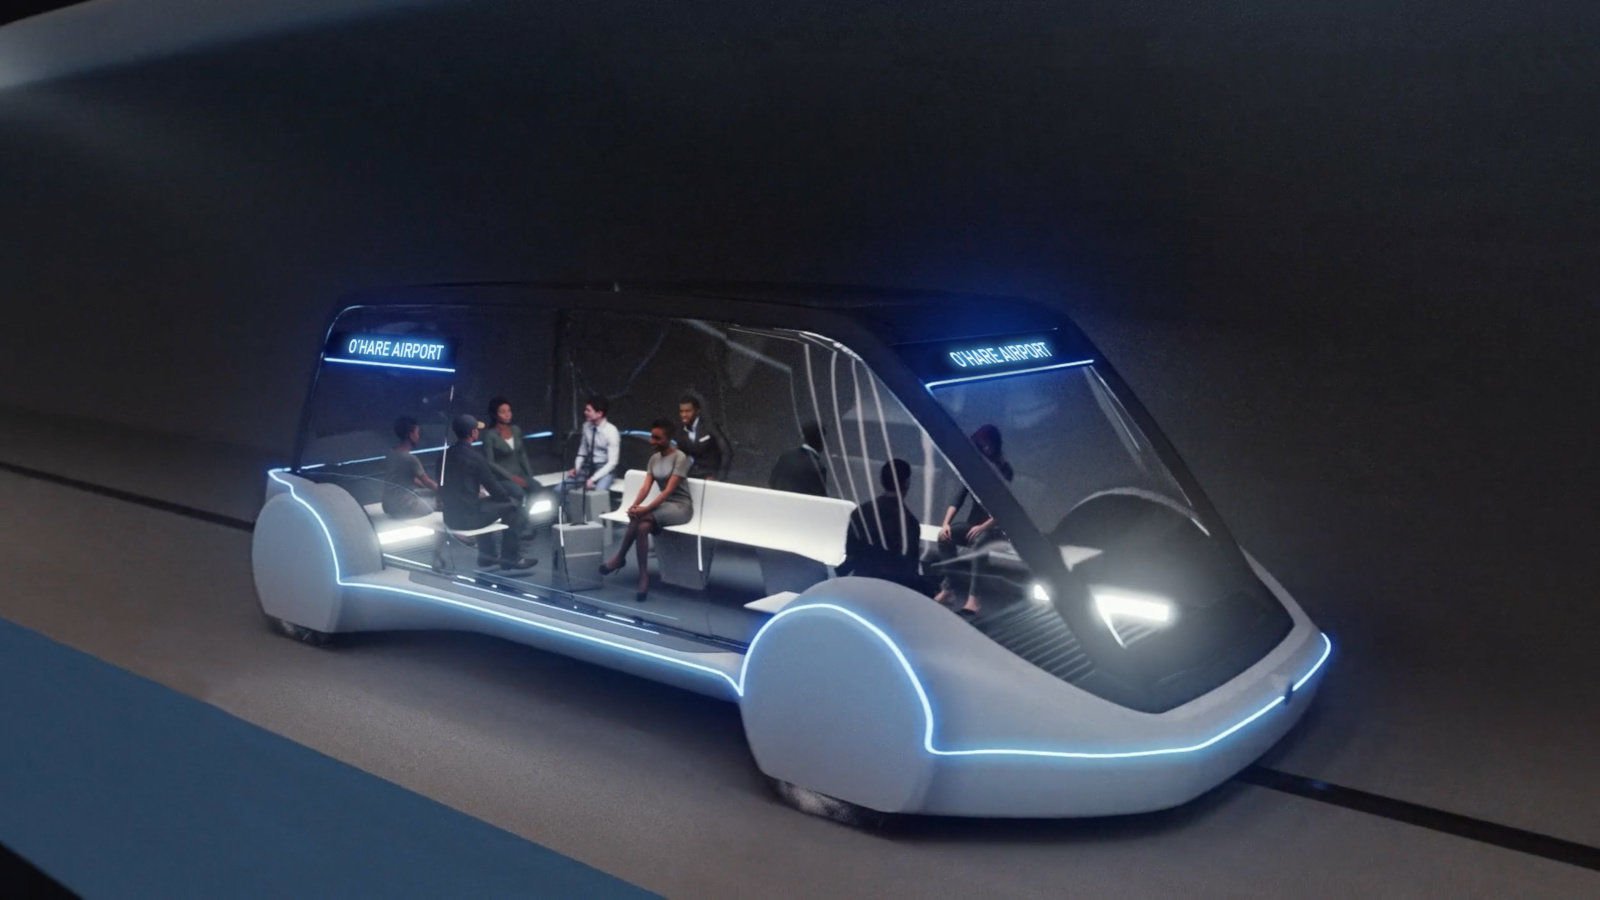 Boring Company Tunnel öffnet sich mit autonomen Autos 18. Dezember